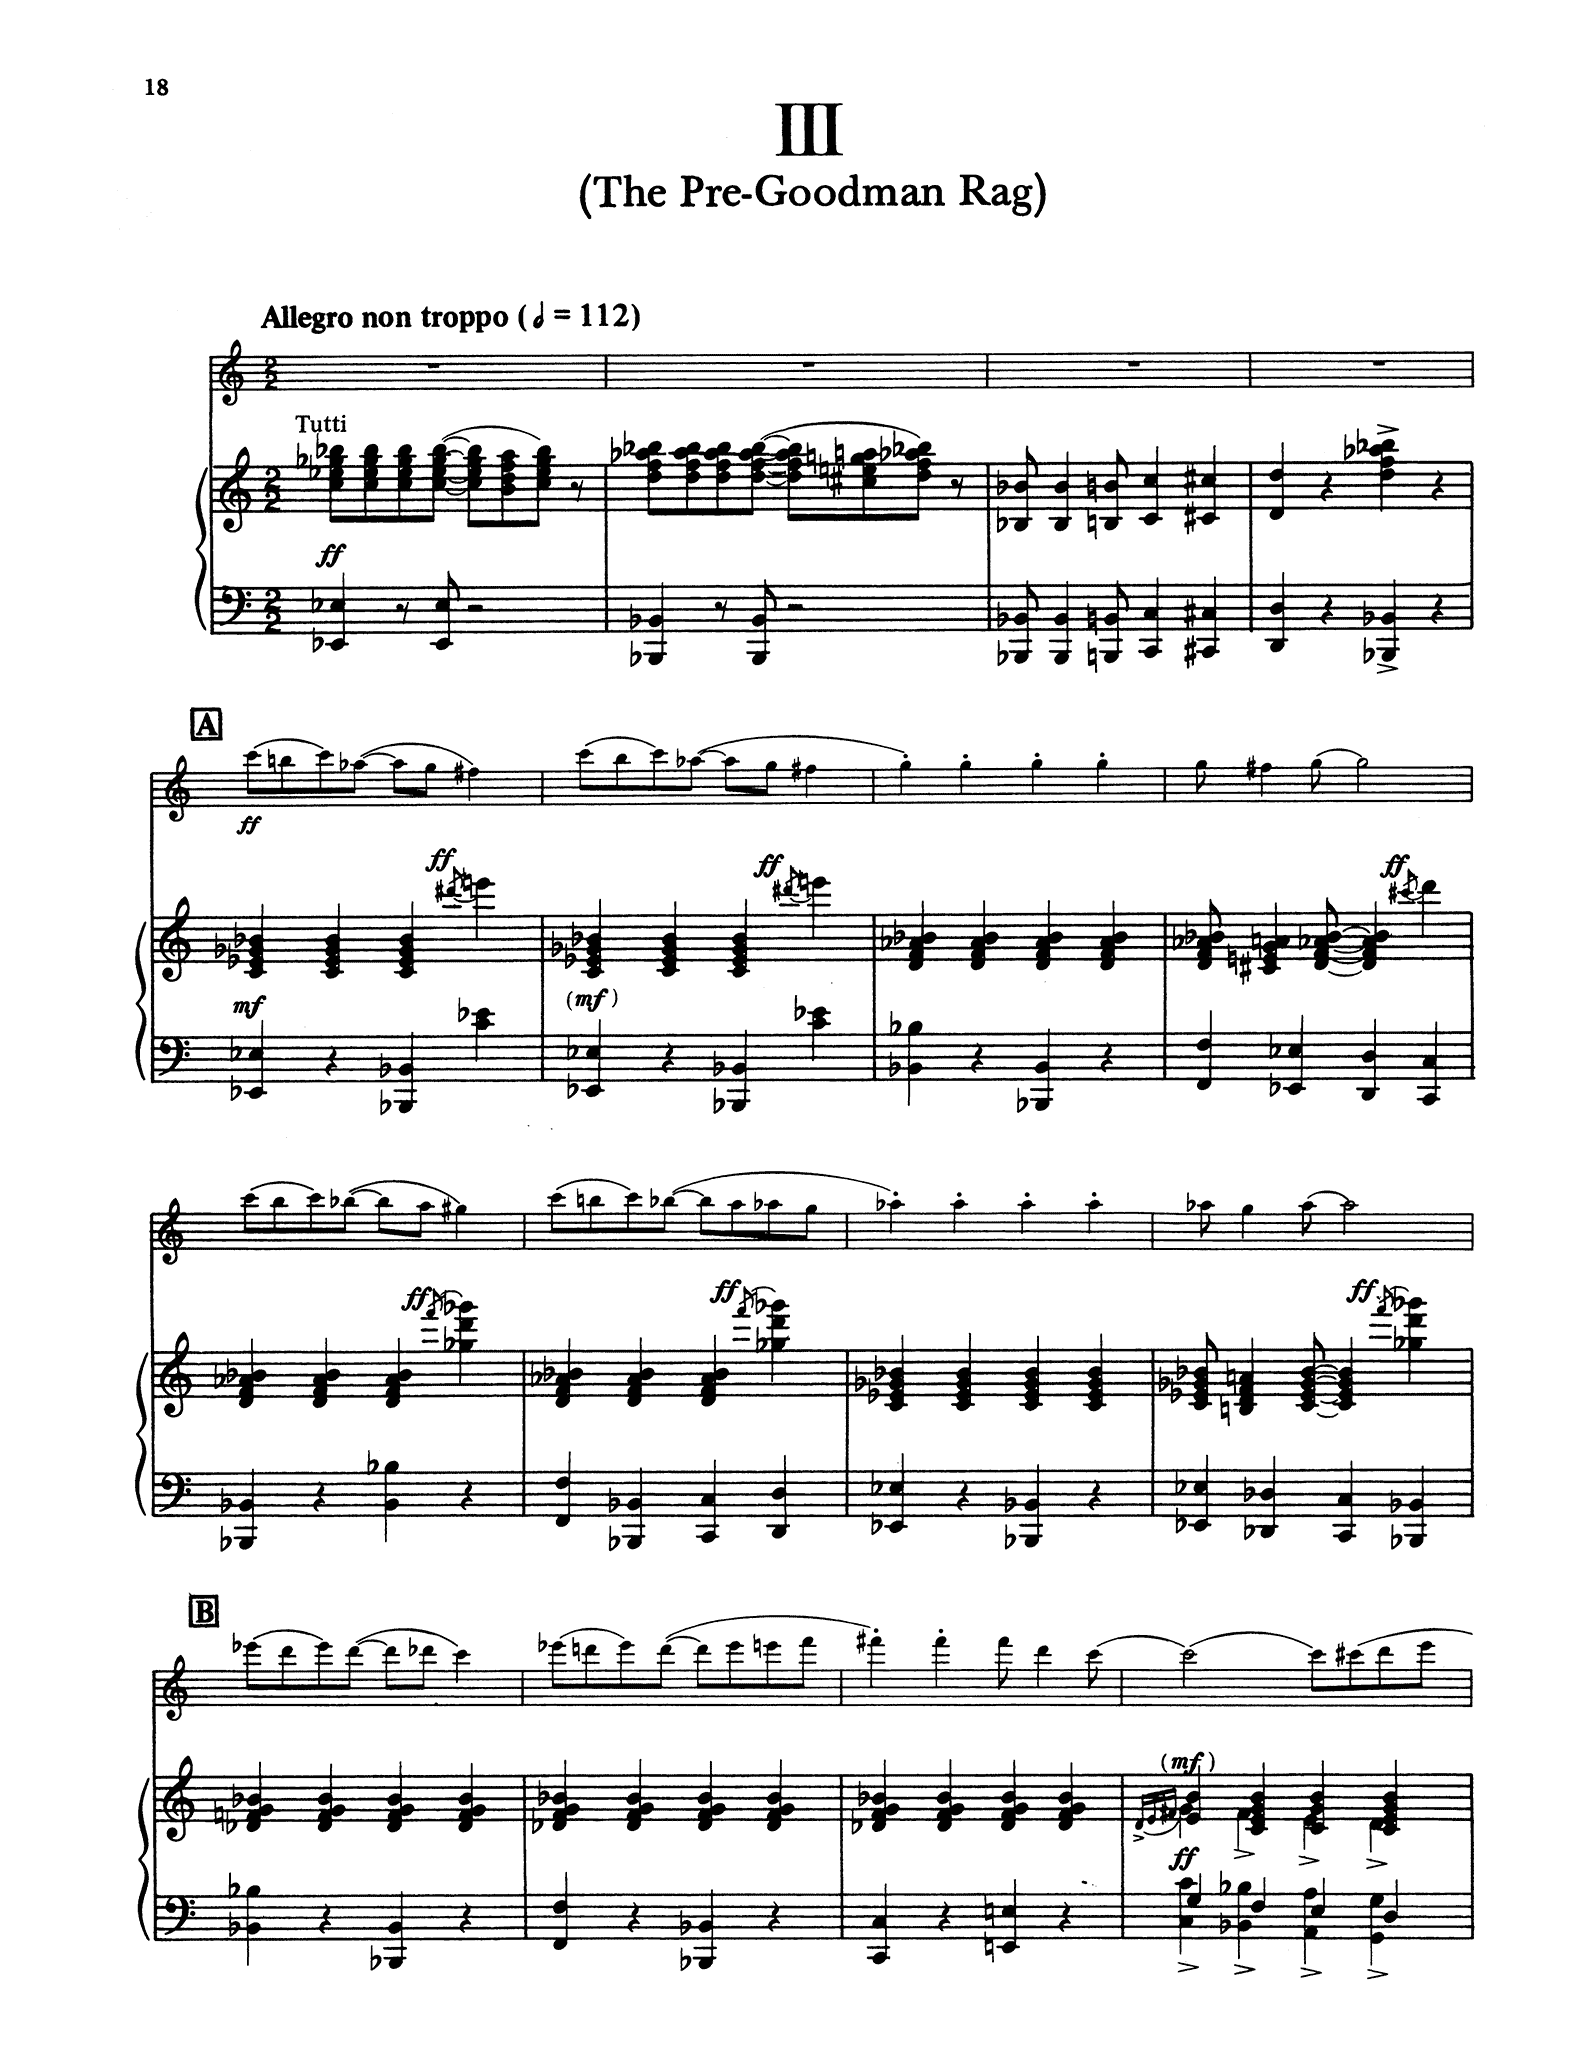 Arnold Clarinet Concerto No. 2, Op. 115 piano reduction - Movement 3